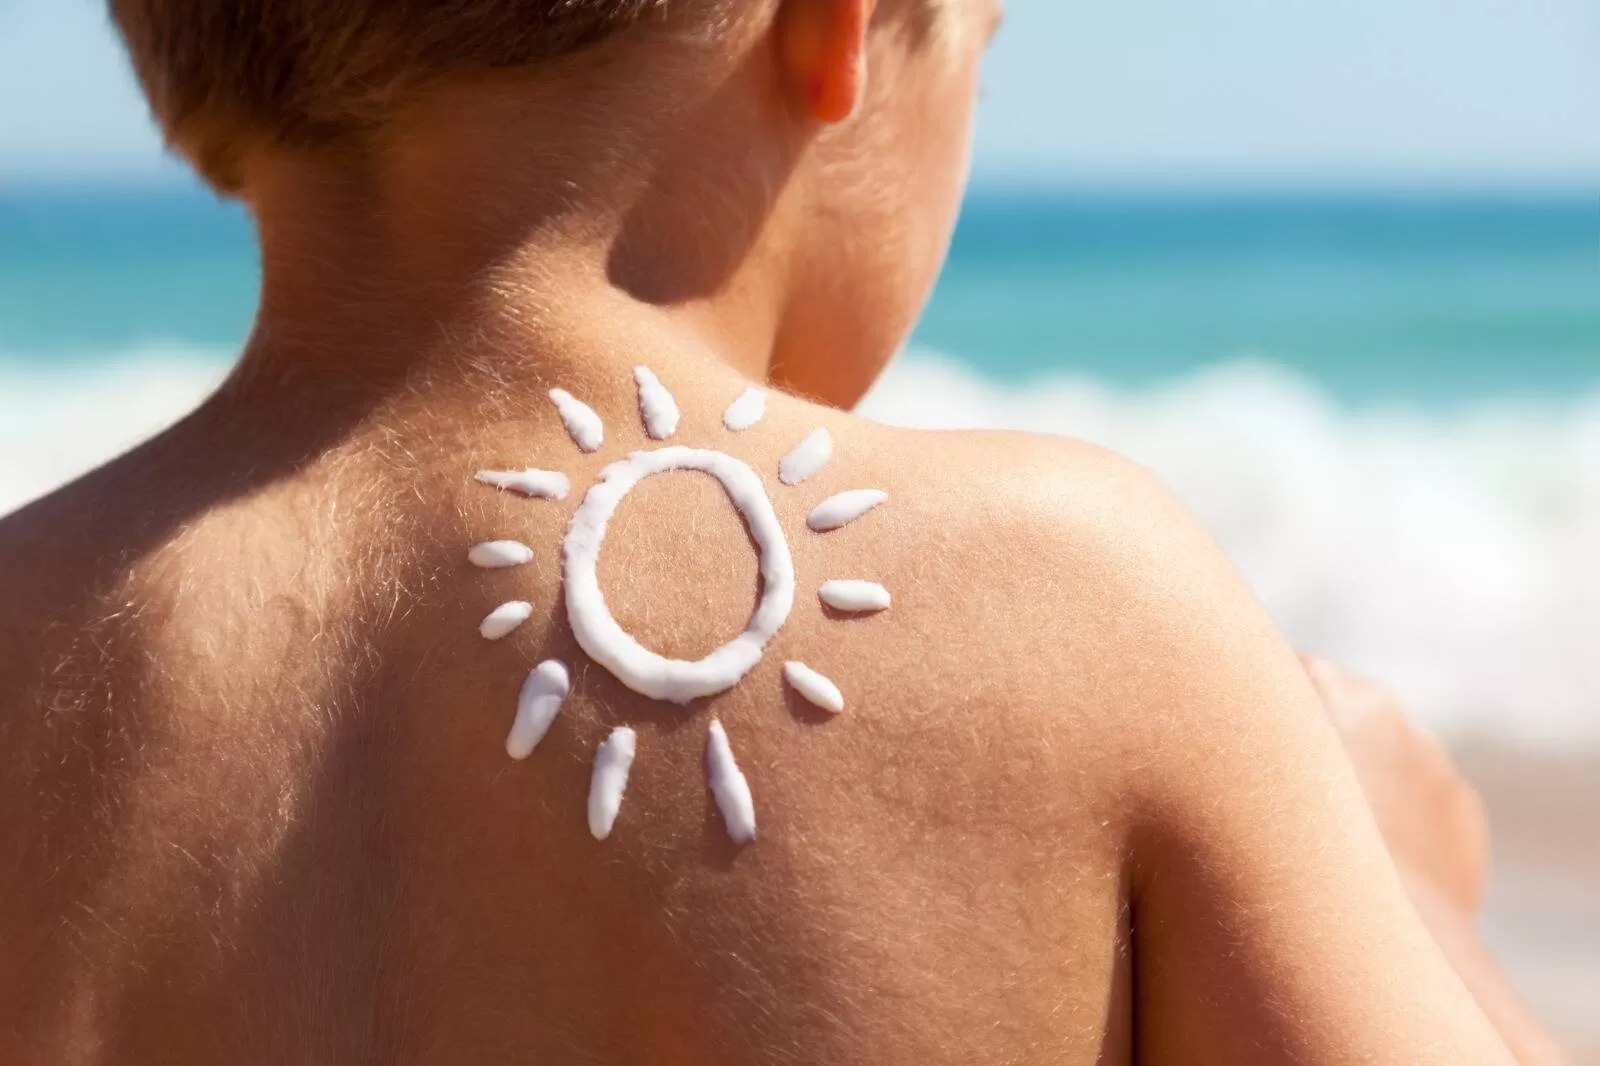 Protecting children's skin: key to treating pediatric psoriasis
